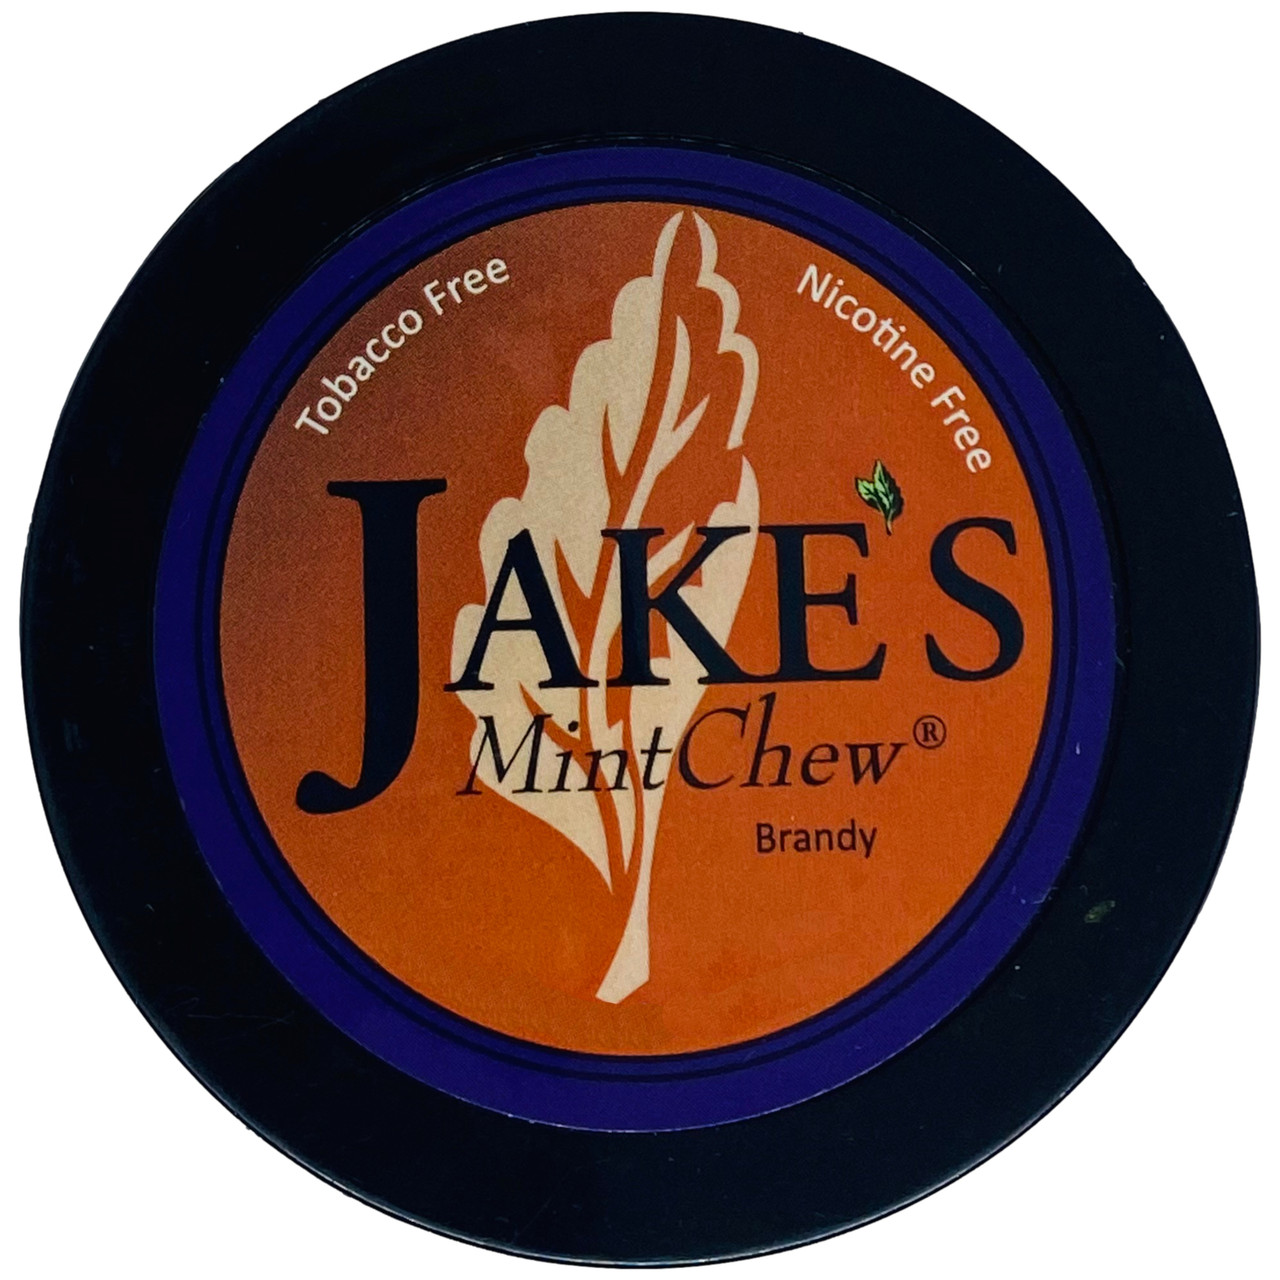 Jake's Mint Chew Brandy 1 Can